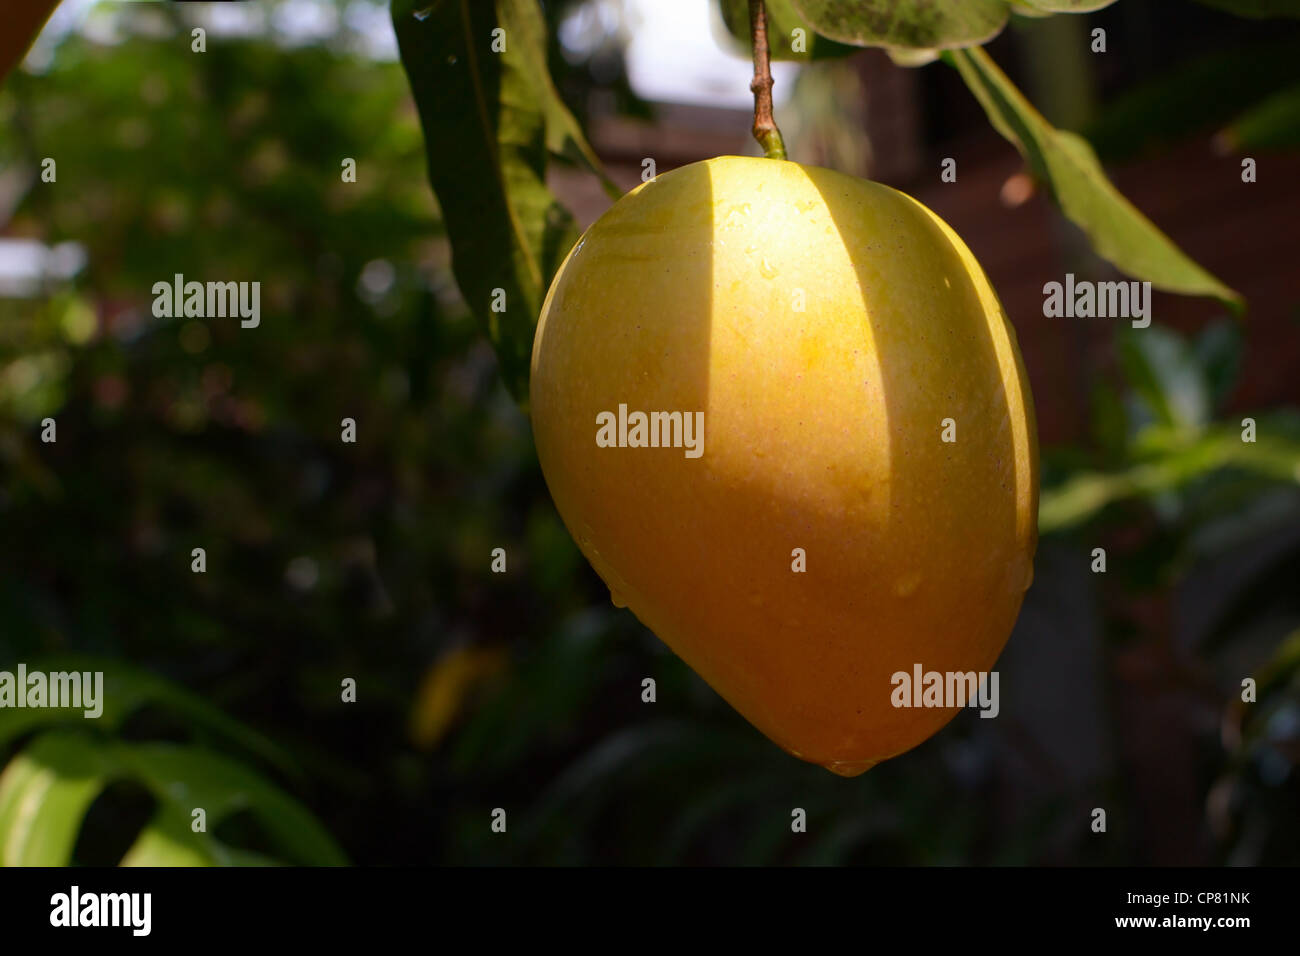 closeup image of ripe mango, with scientific name mangifera indica. Stock Photo